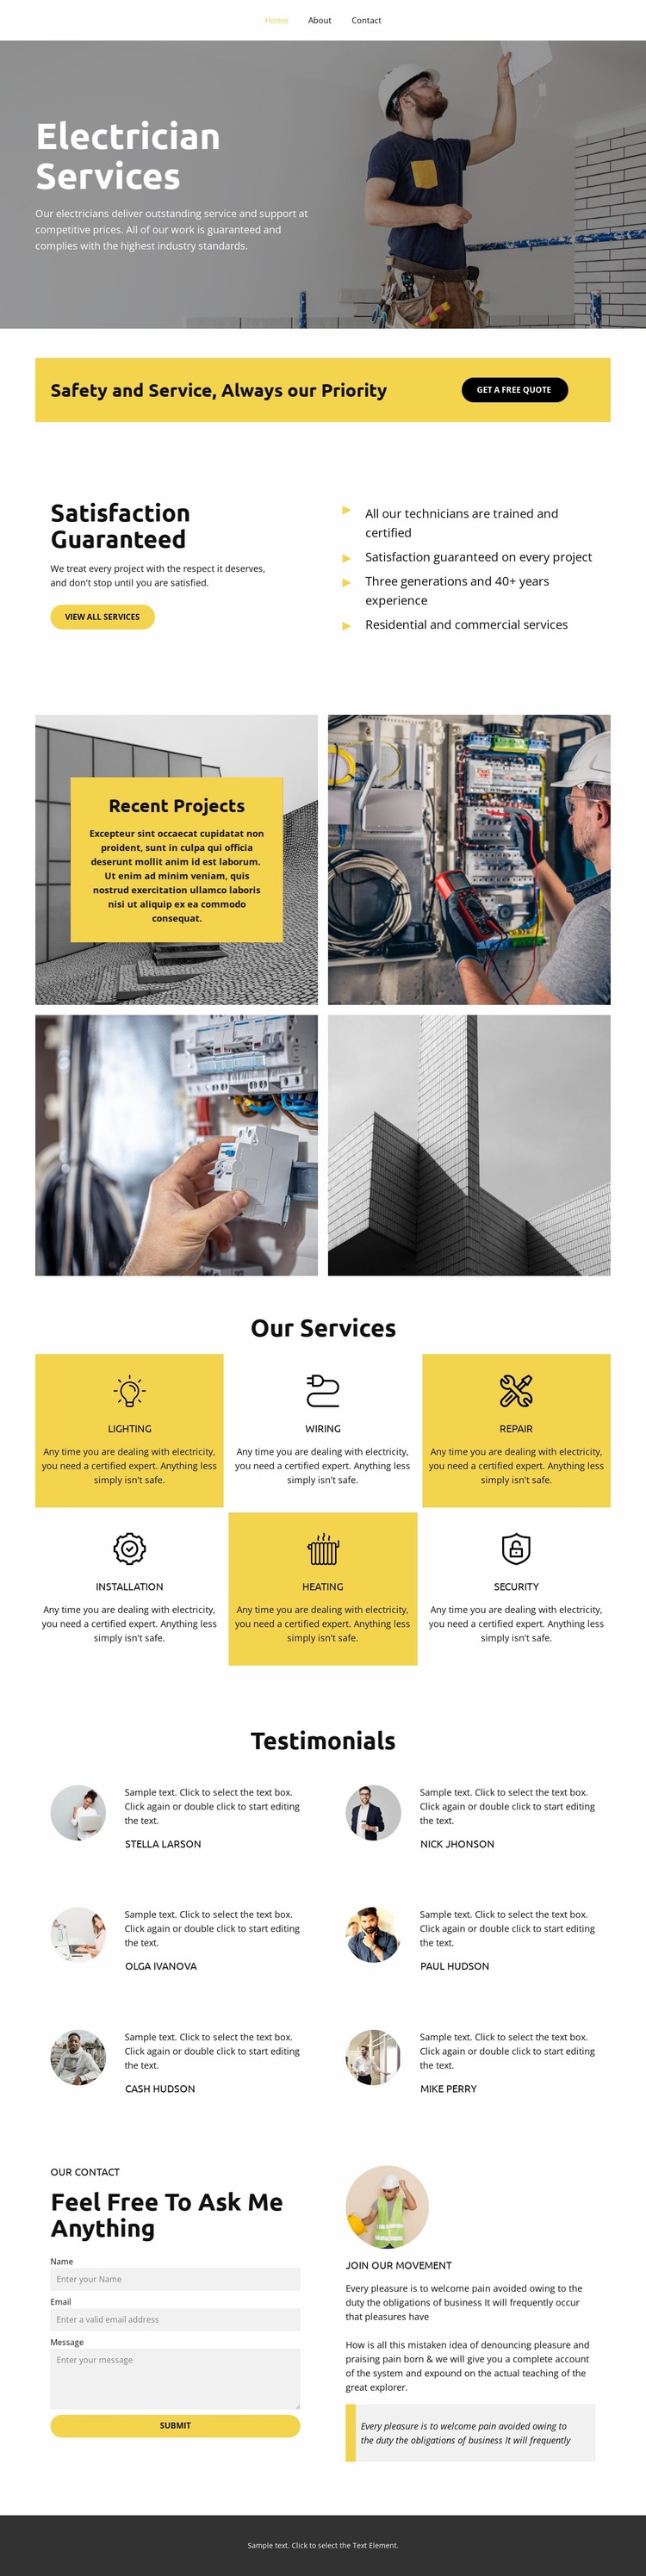 Electrician Services Website Mockup